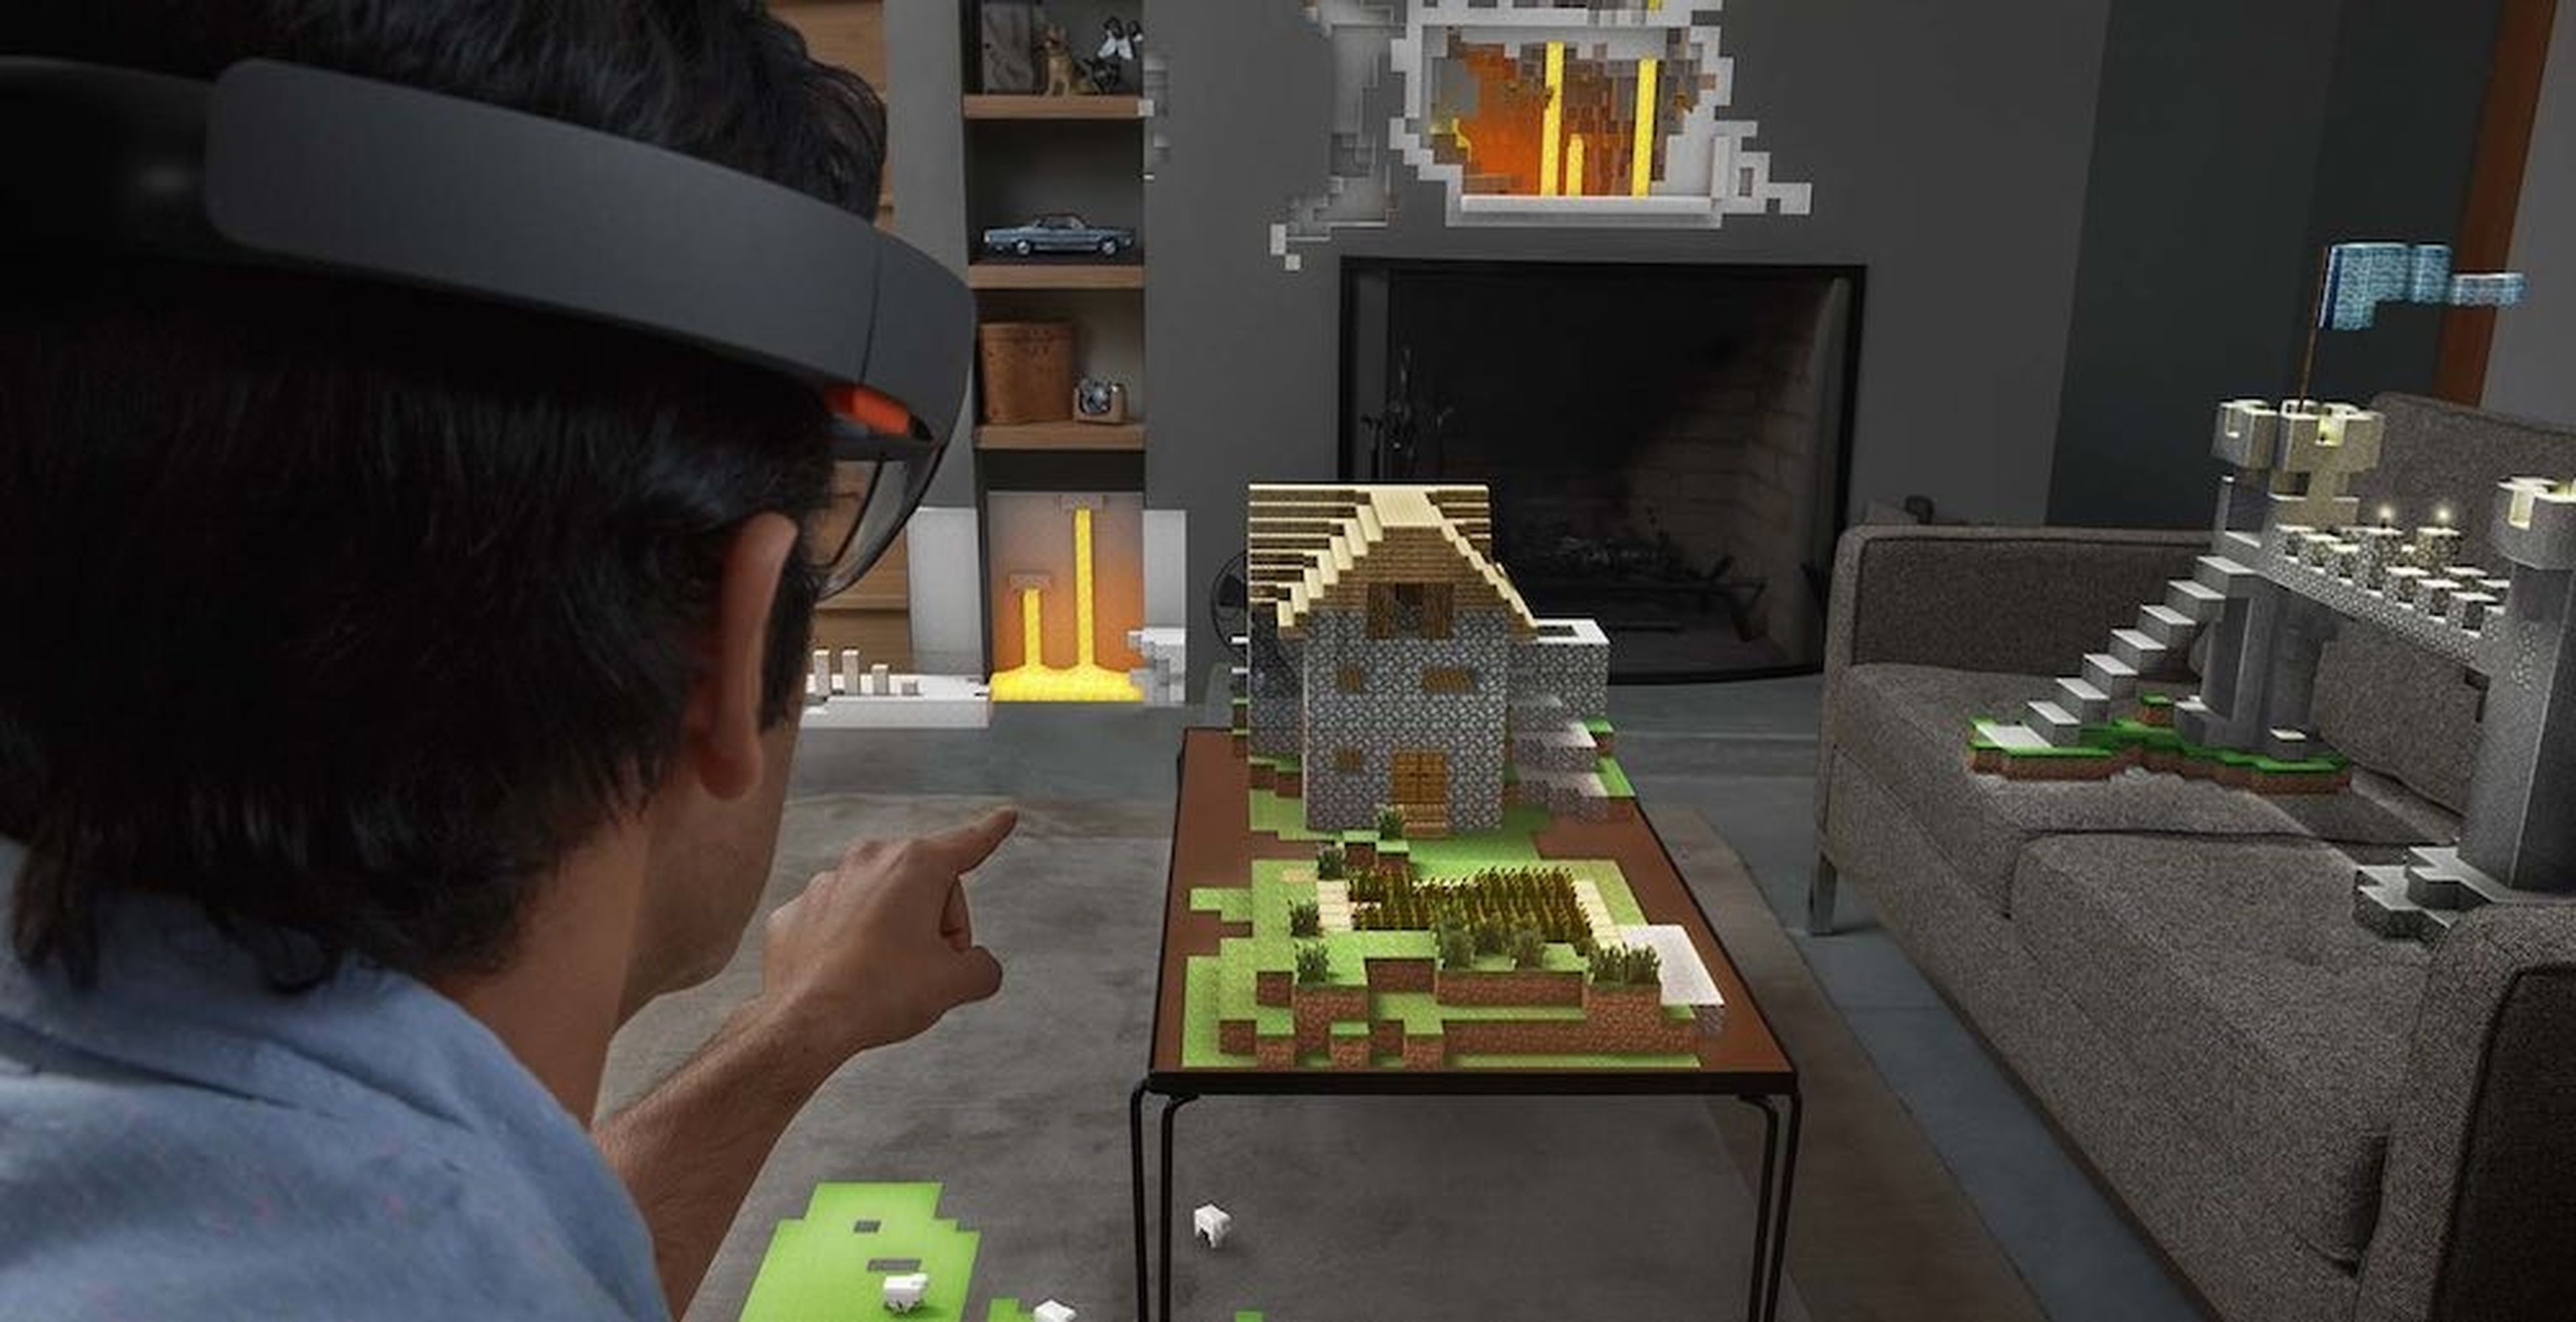 Peter Molyneux no confía en HoloLens